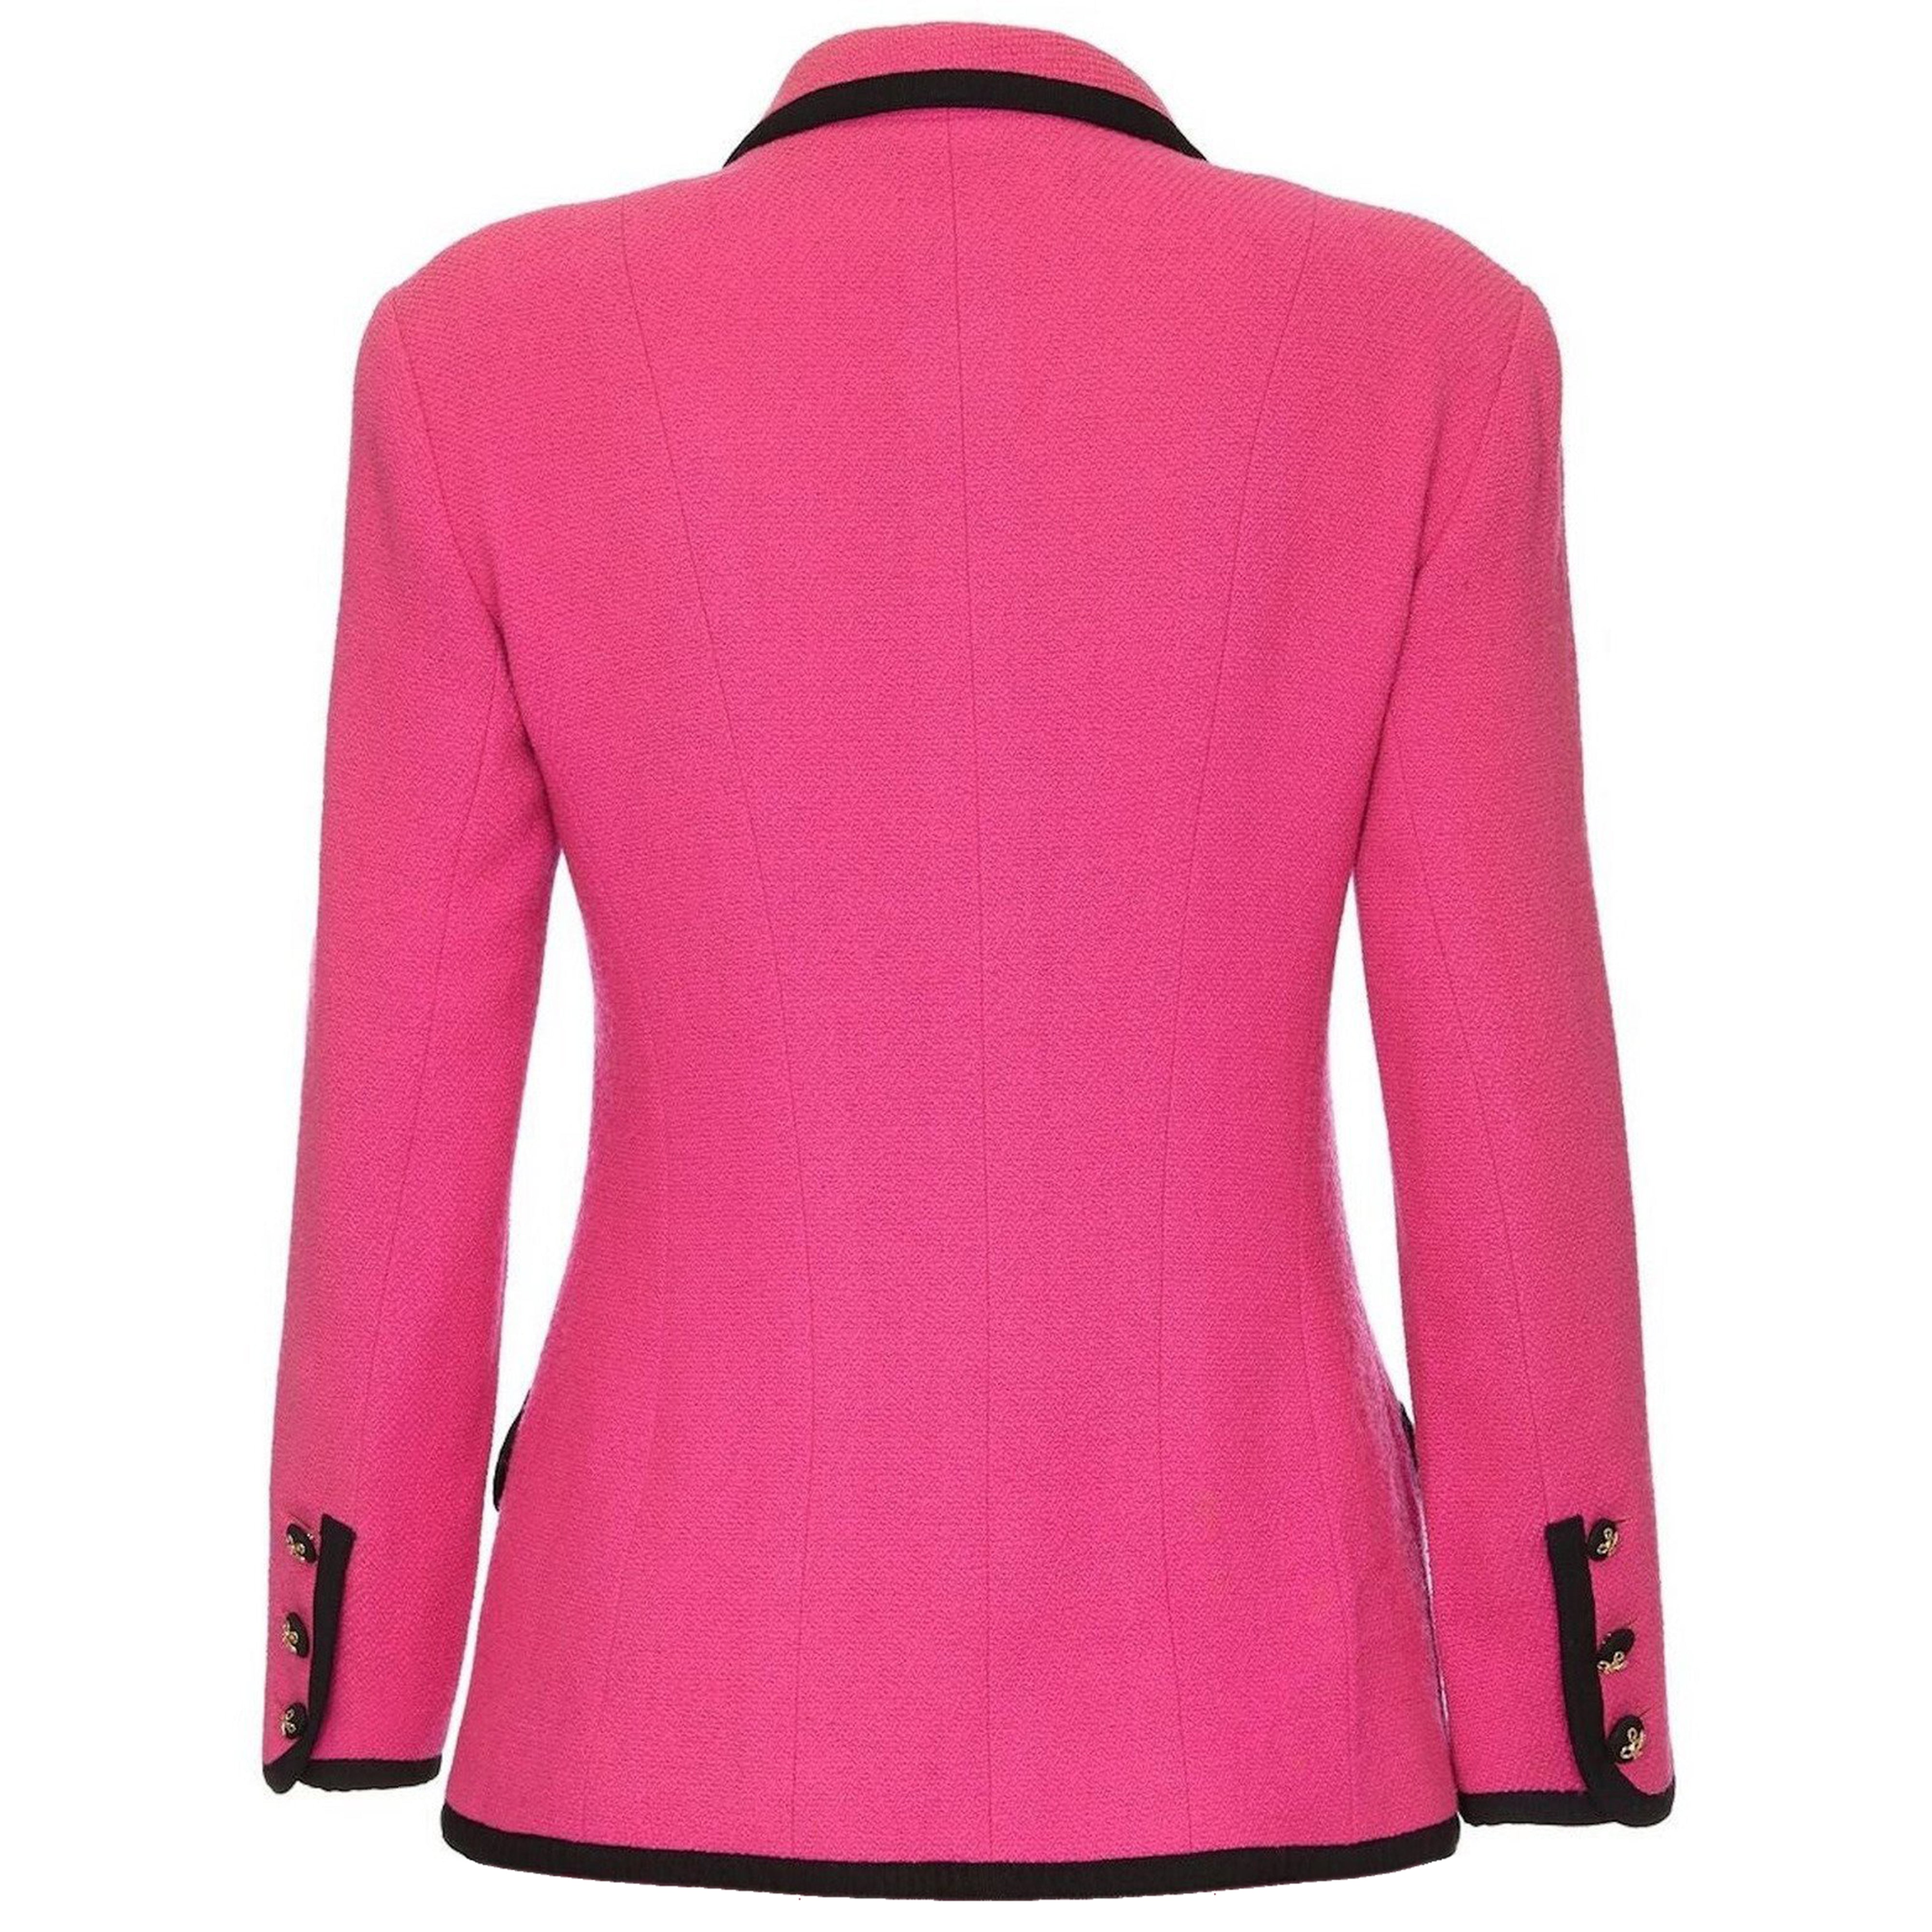 1991 Runway Documented Chanel Fuchsia Pink Wool Jacket